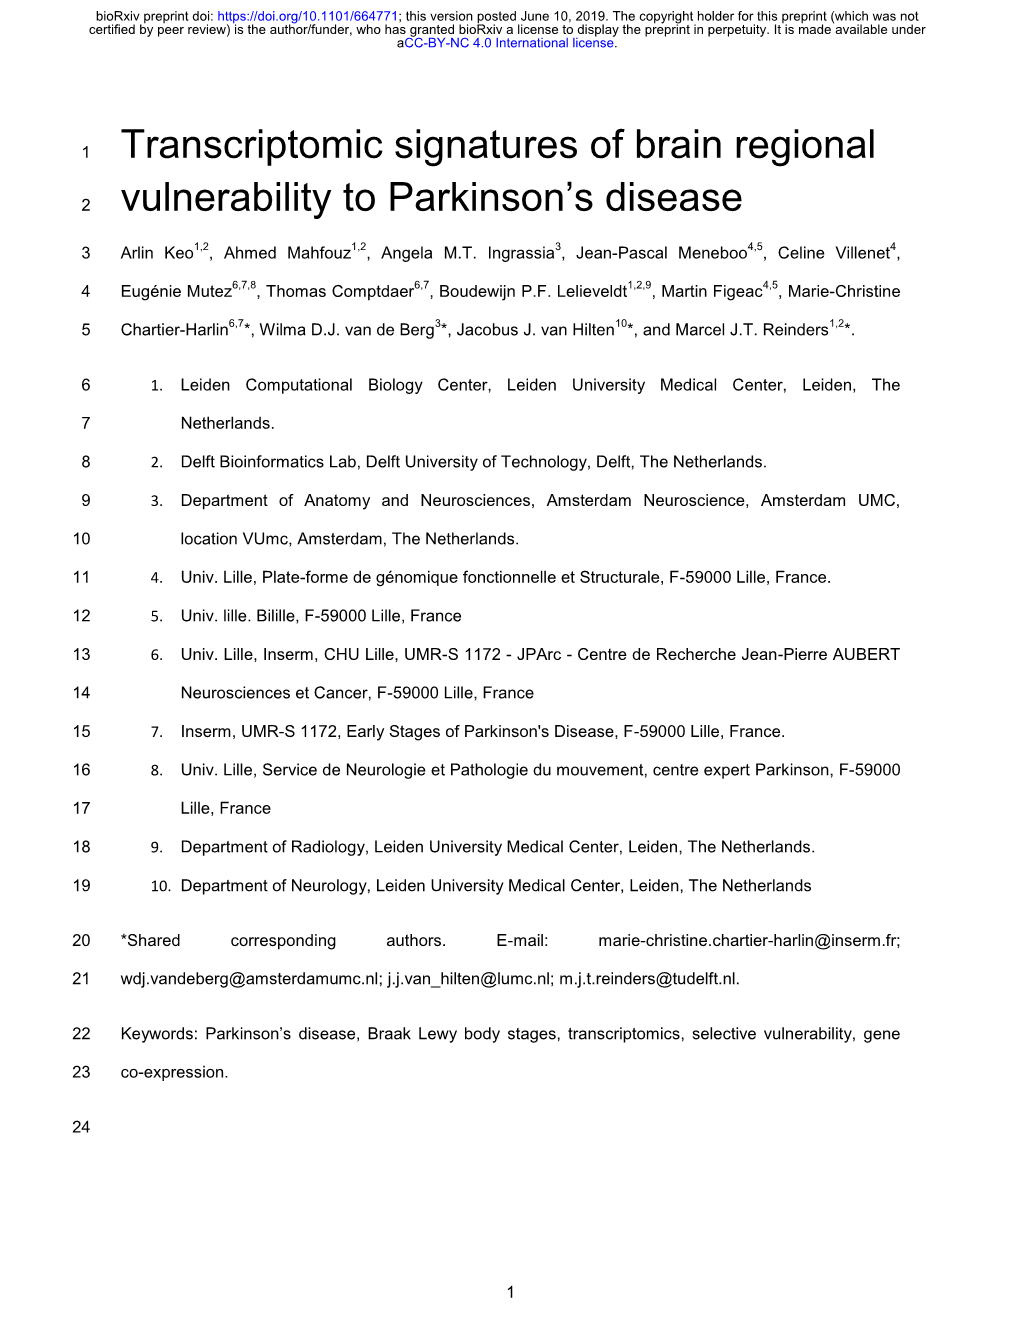 Transcriptomic Signatures of Brain Regional Vulnerability to Parkinson's